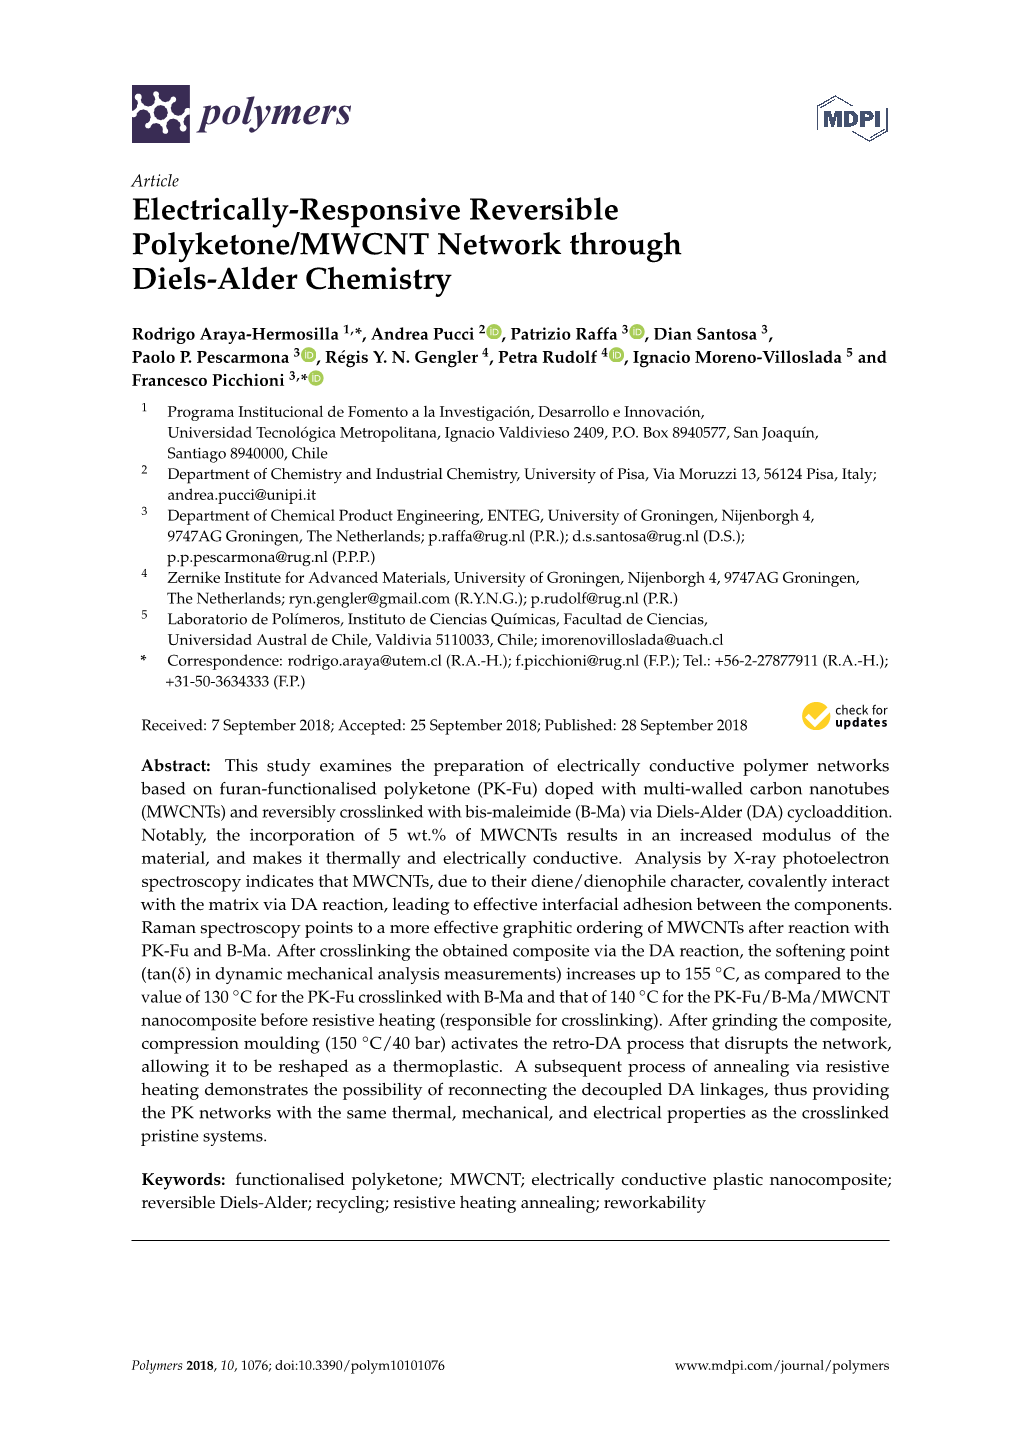 Electrically-Responsive Reversible Polyketone/MWCNT Network Through Diels-Alder Chemistry